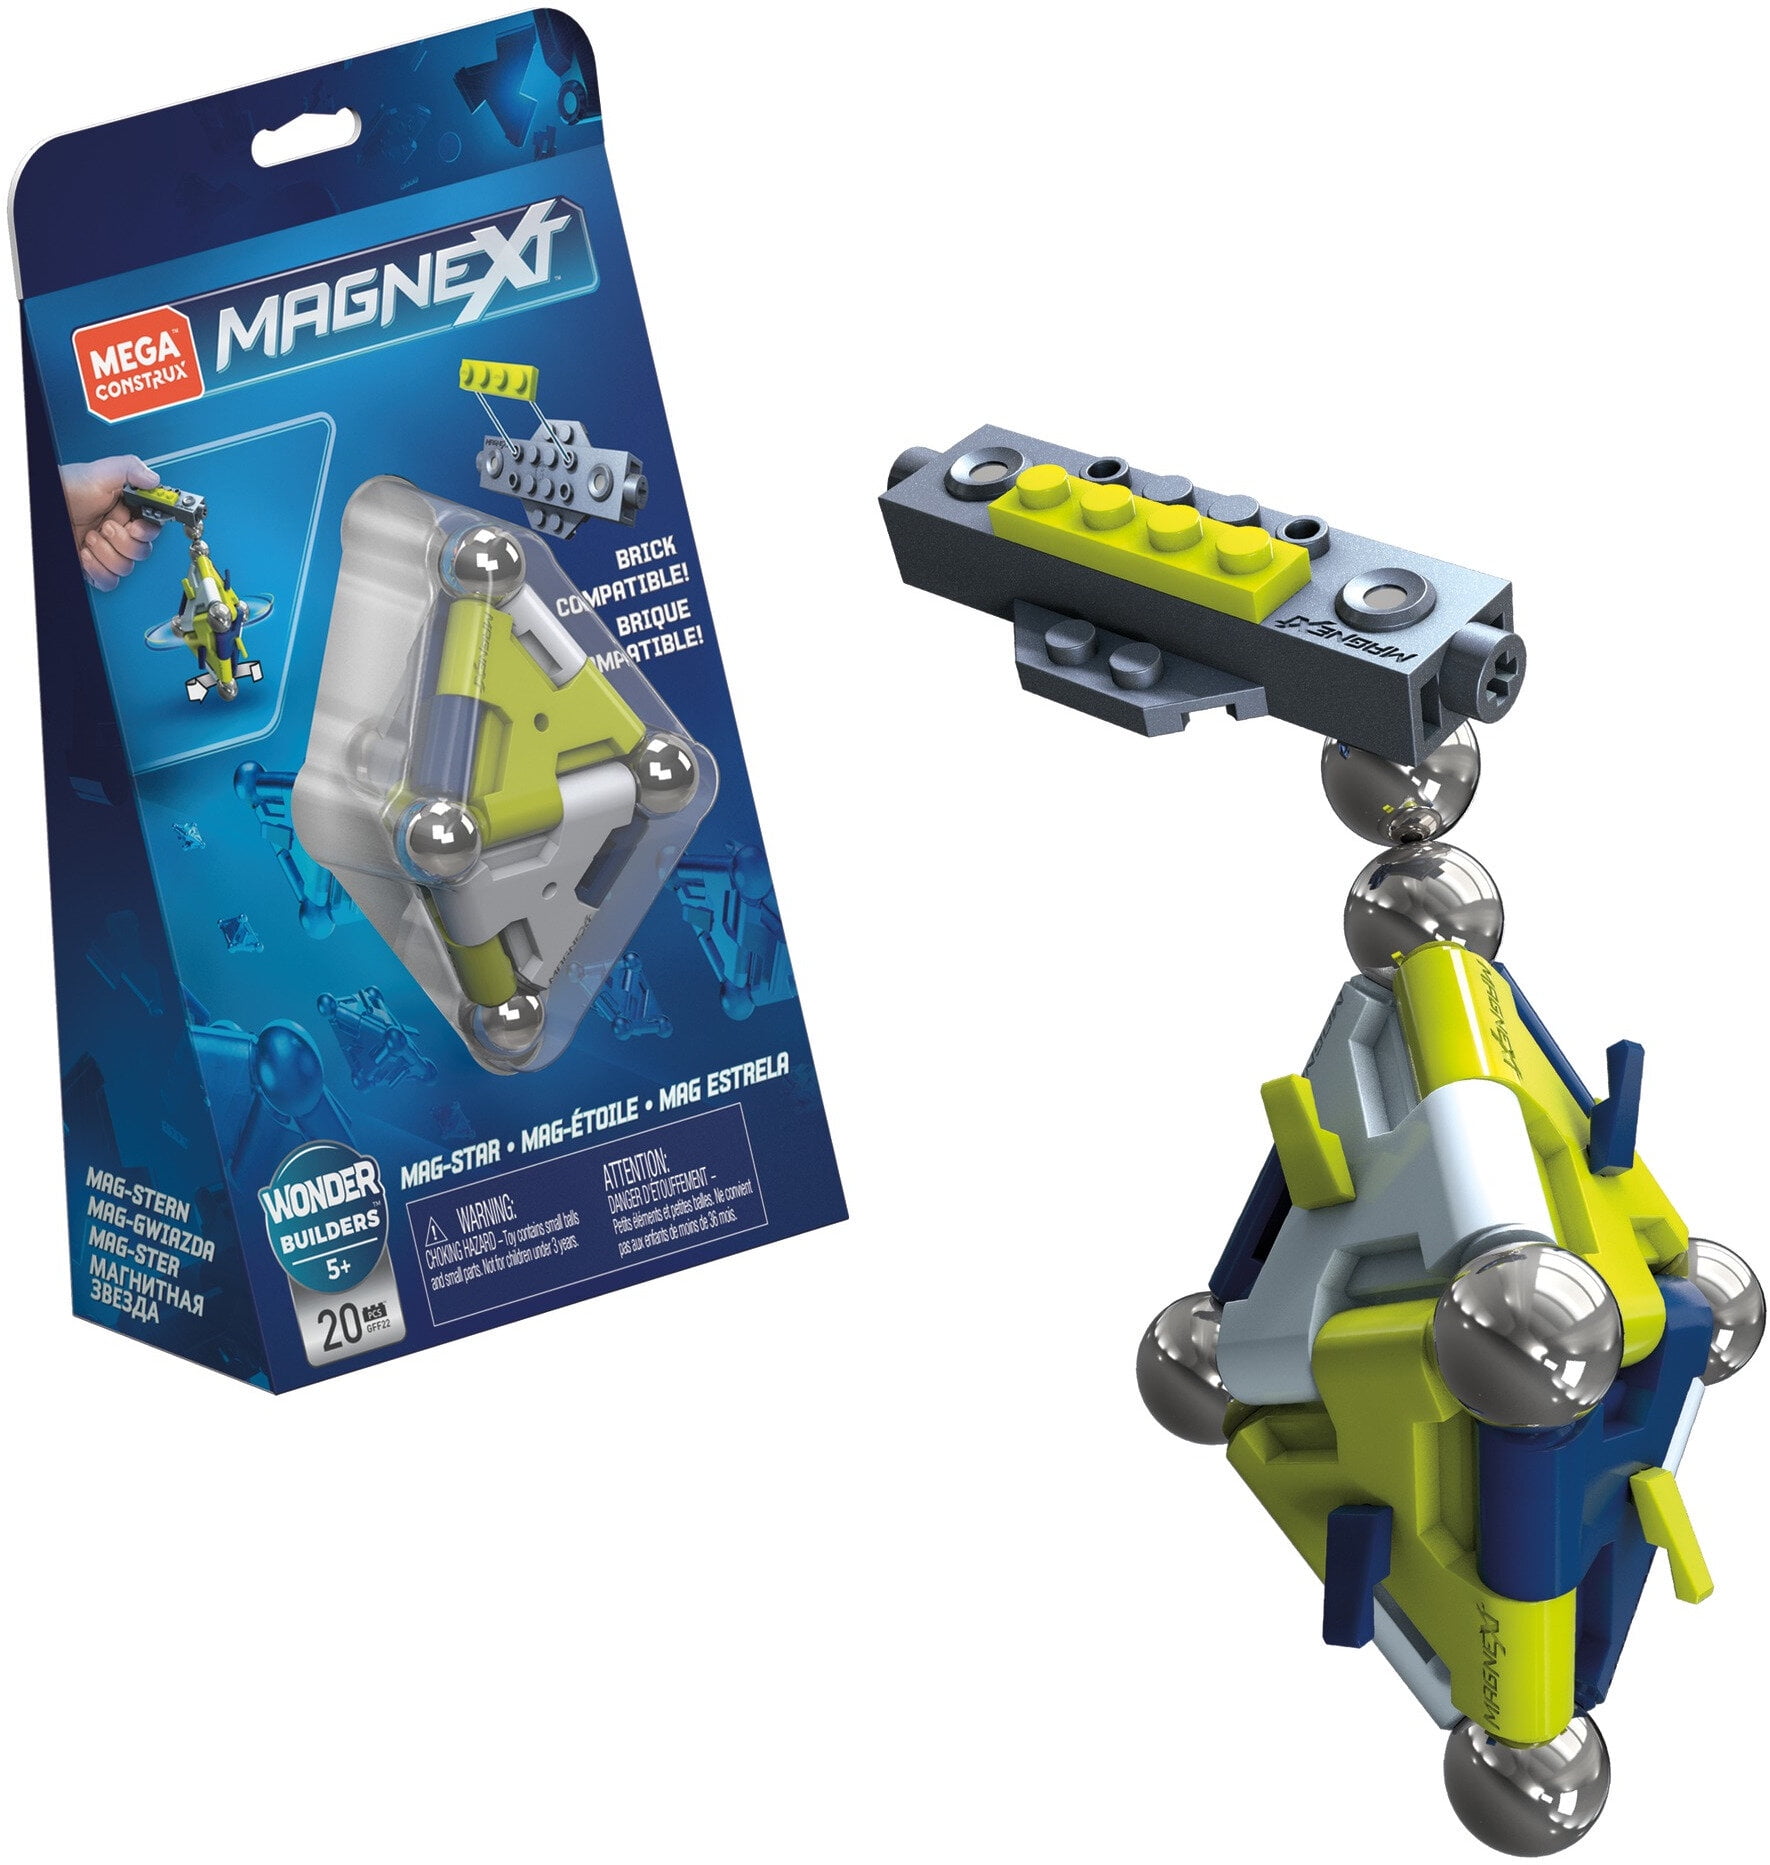 MEGA Construx Magnext Mag-box Toy Ages 5 Brick Compatible for sale online 